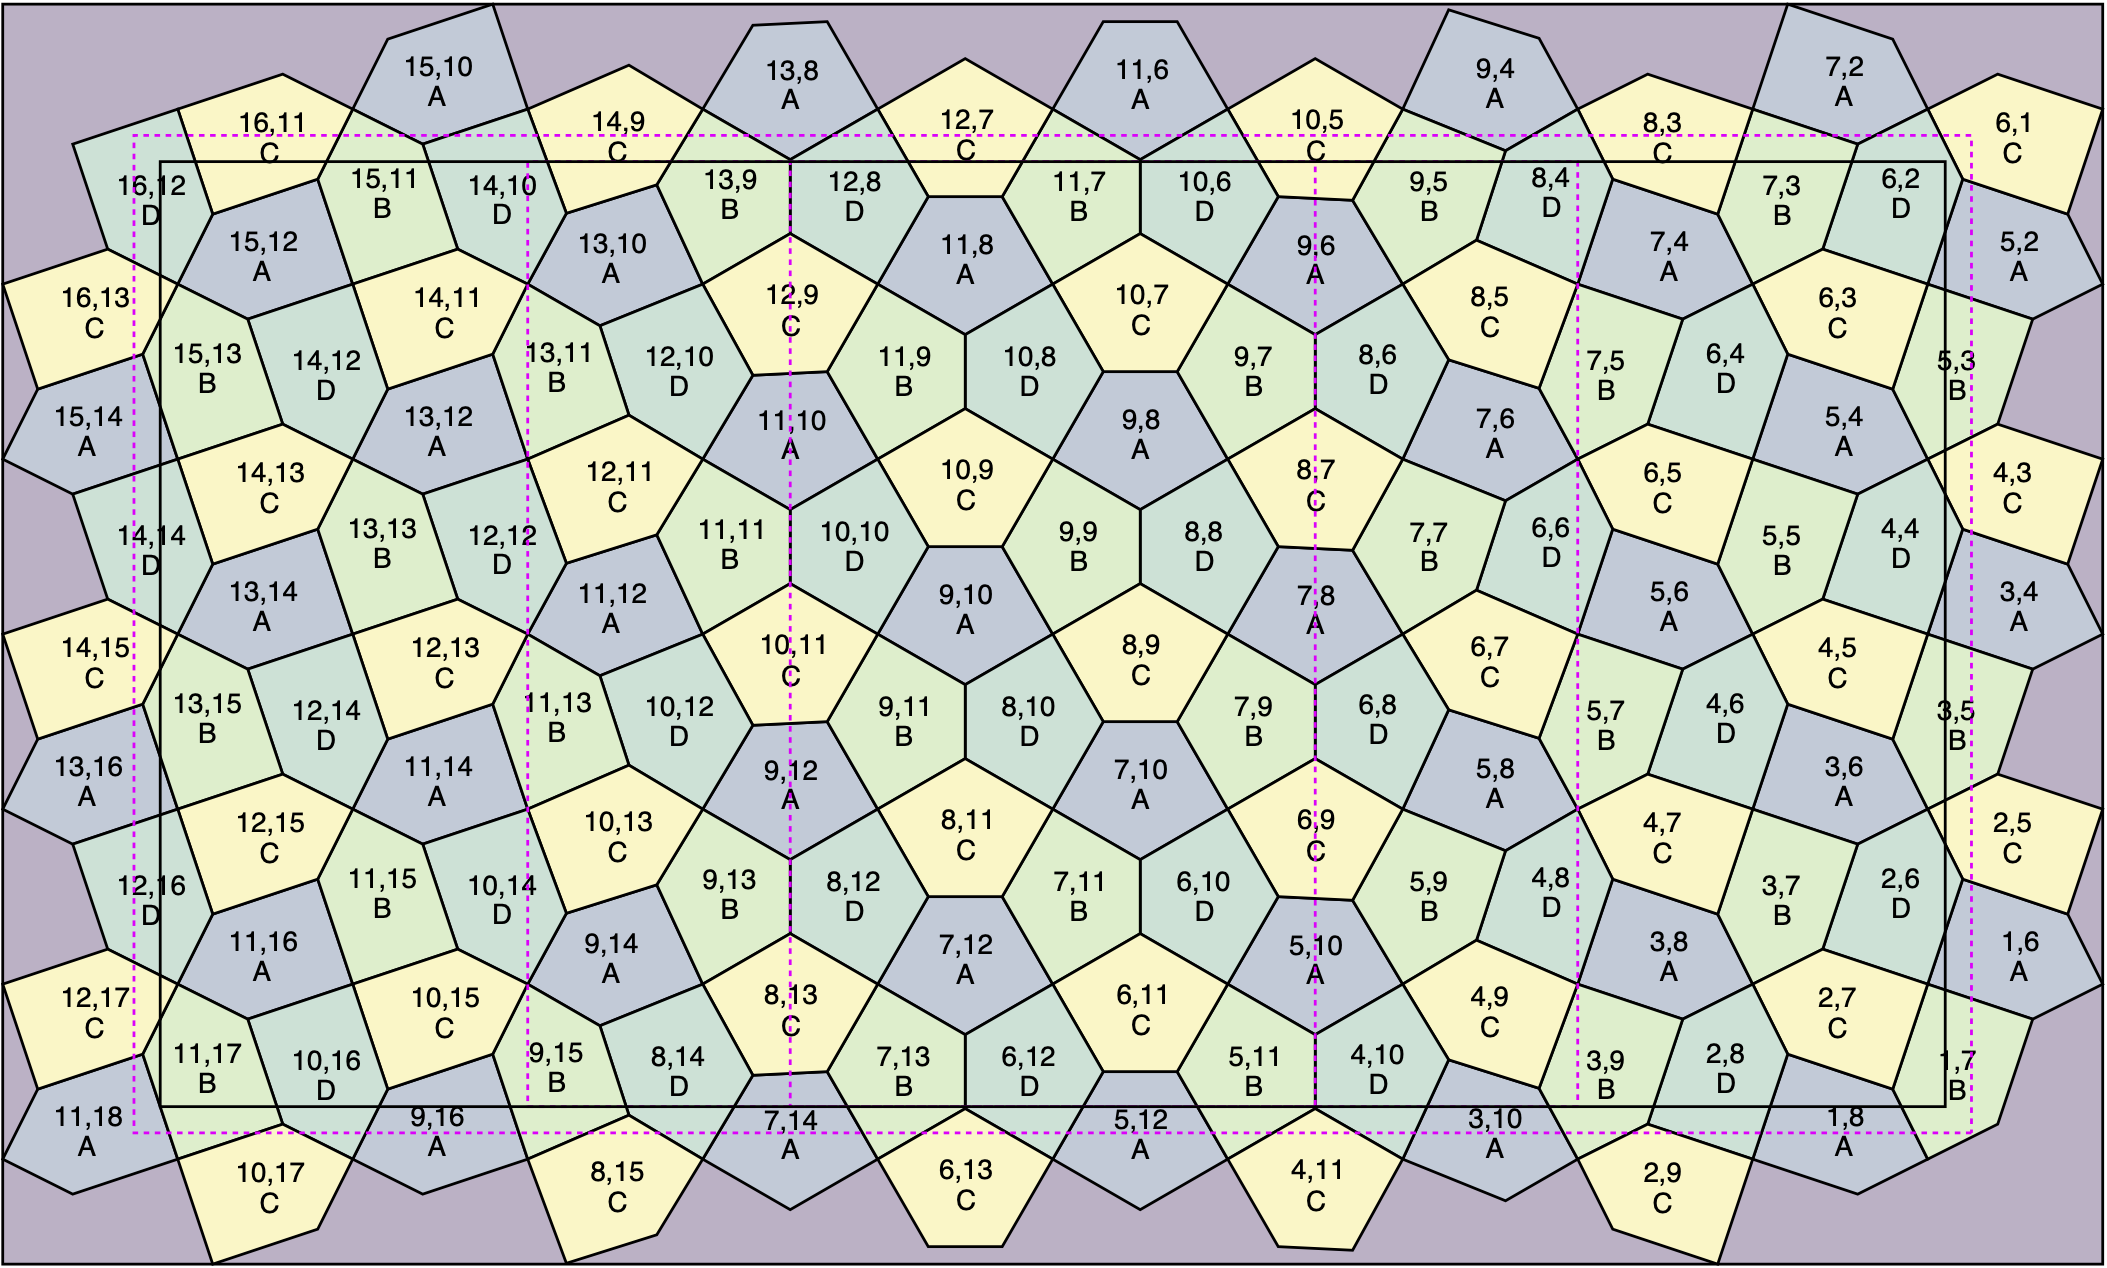 Tile map from Python program